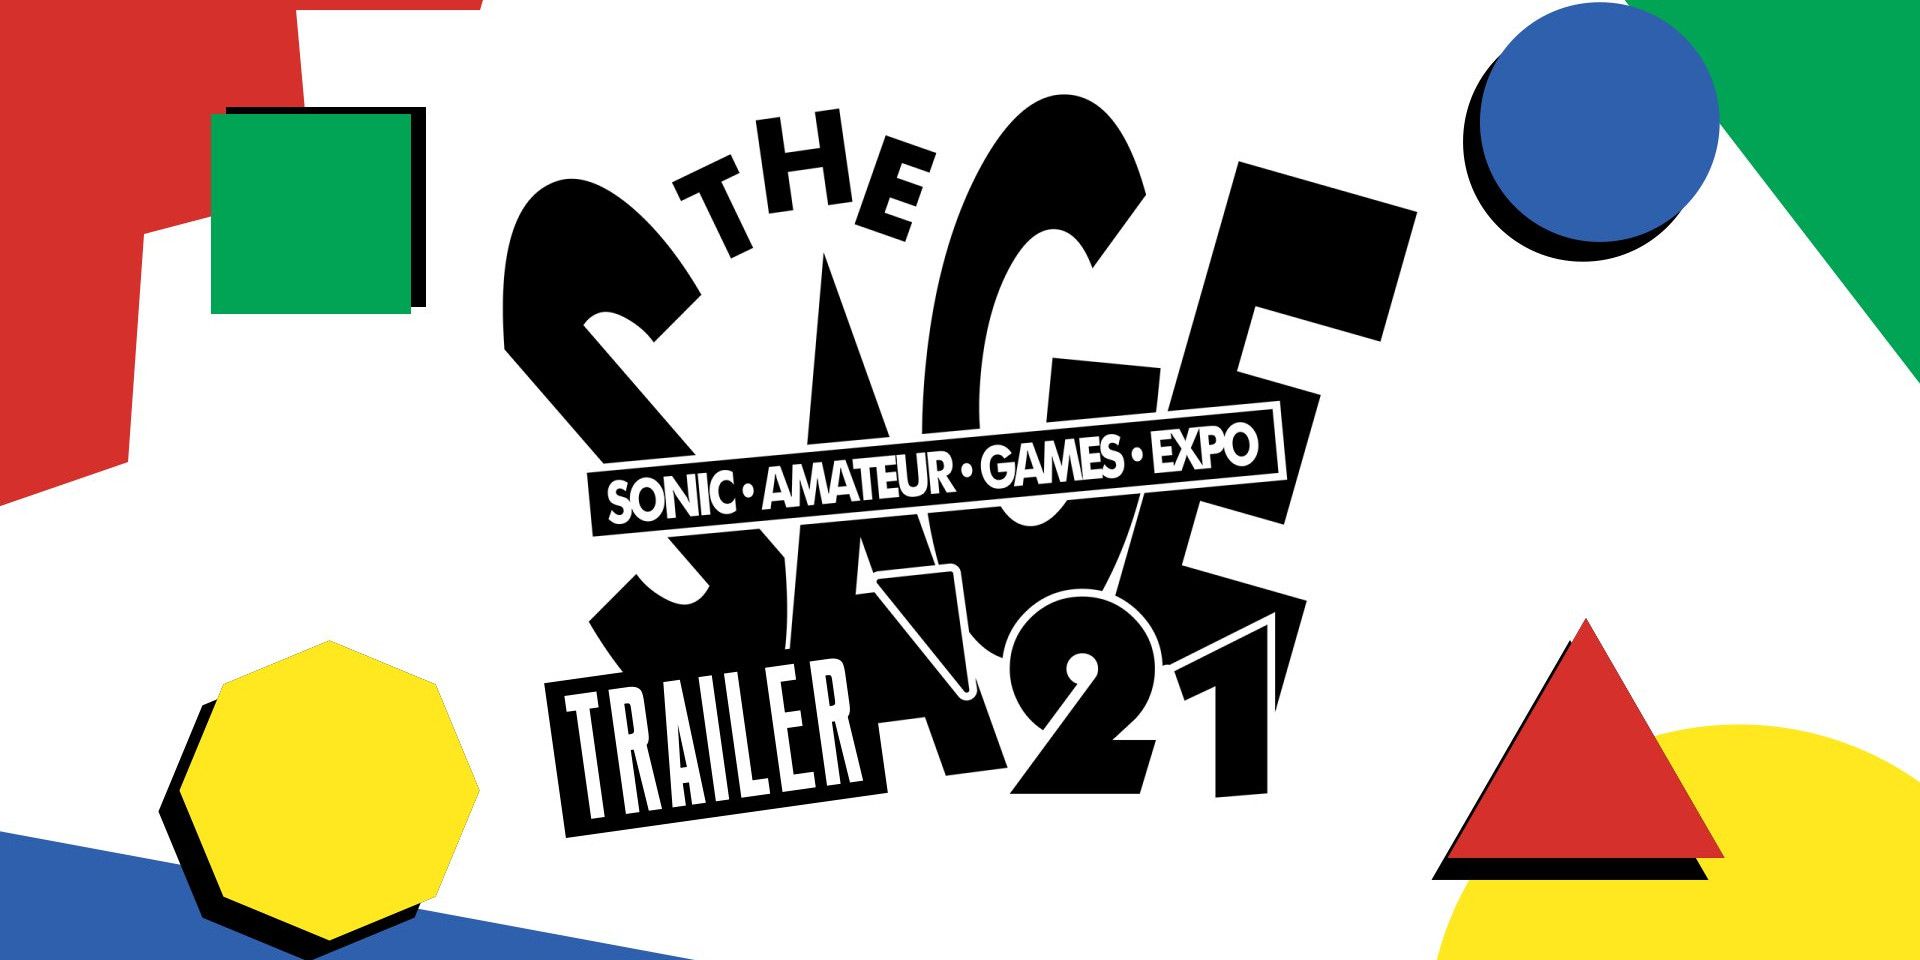 Sonic Amateur Games Expo Trailer banner